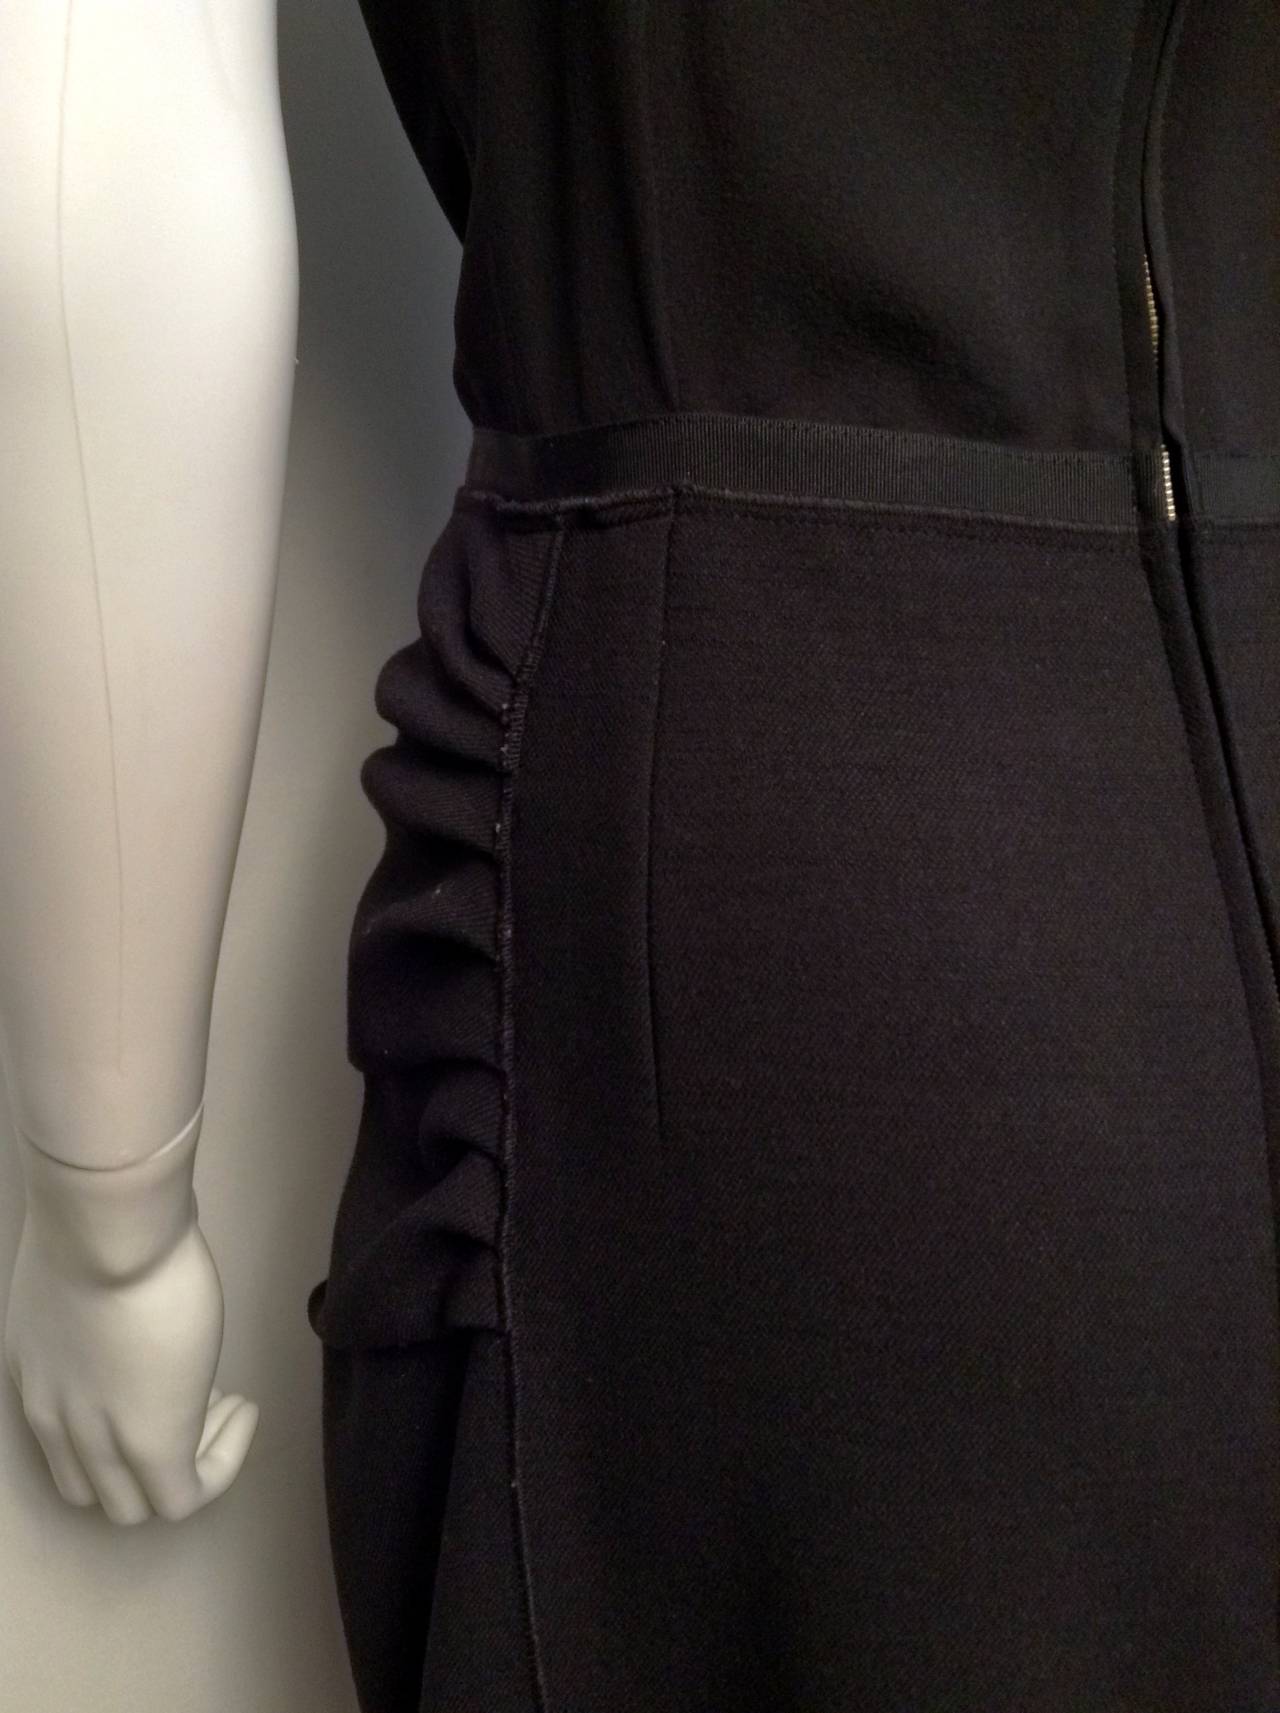 Nina Ricci Black Cocktail Dress Size 42/10 2012 For Sale 5